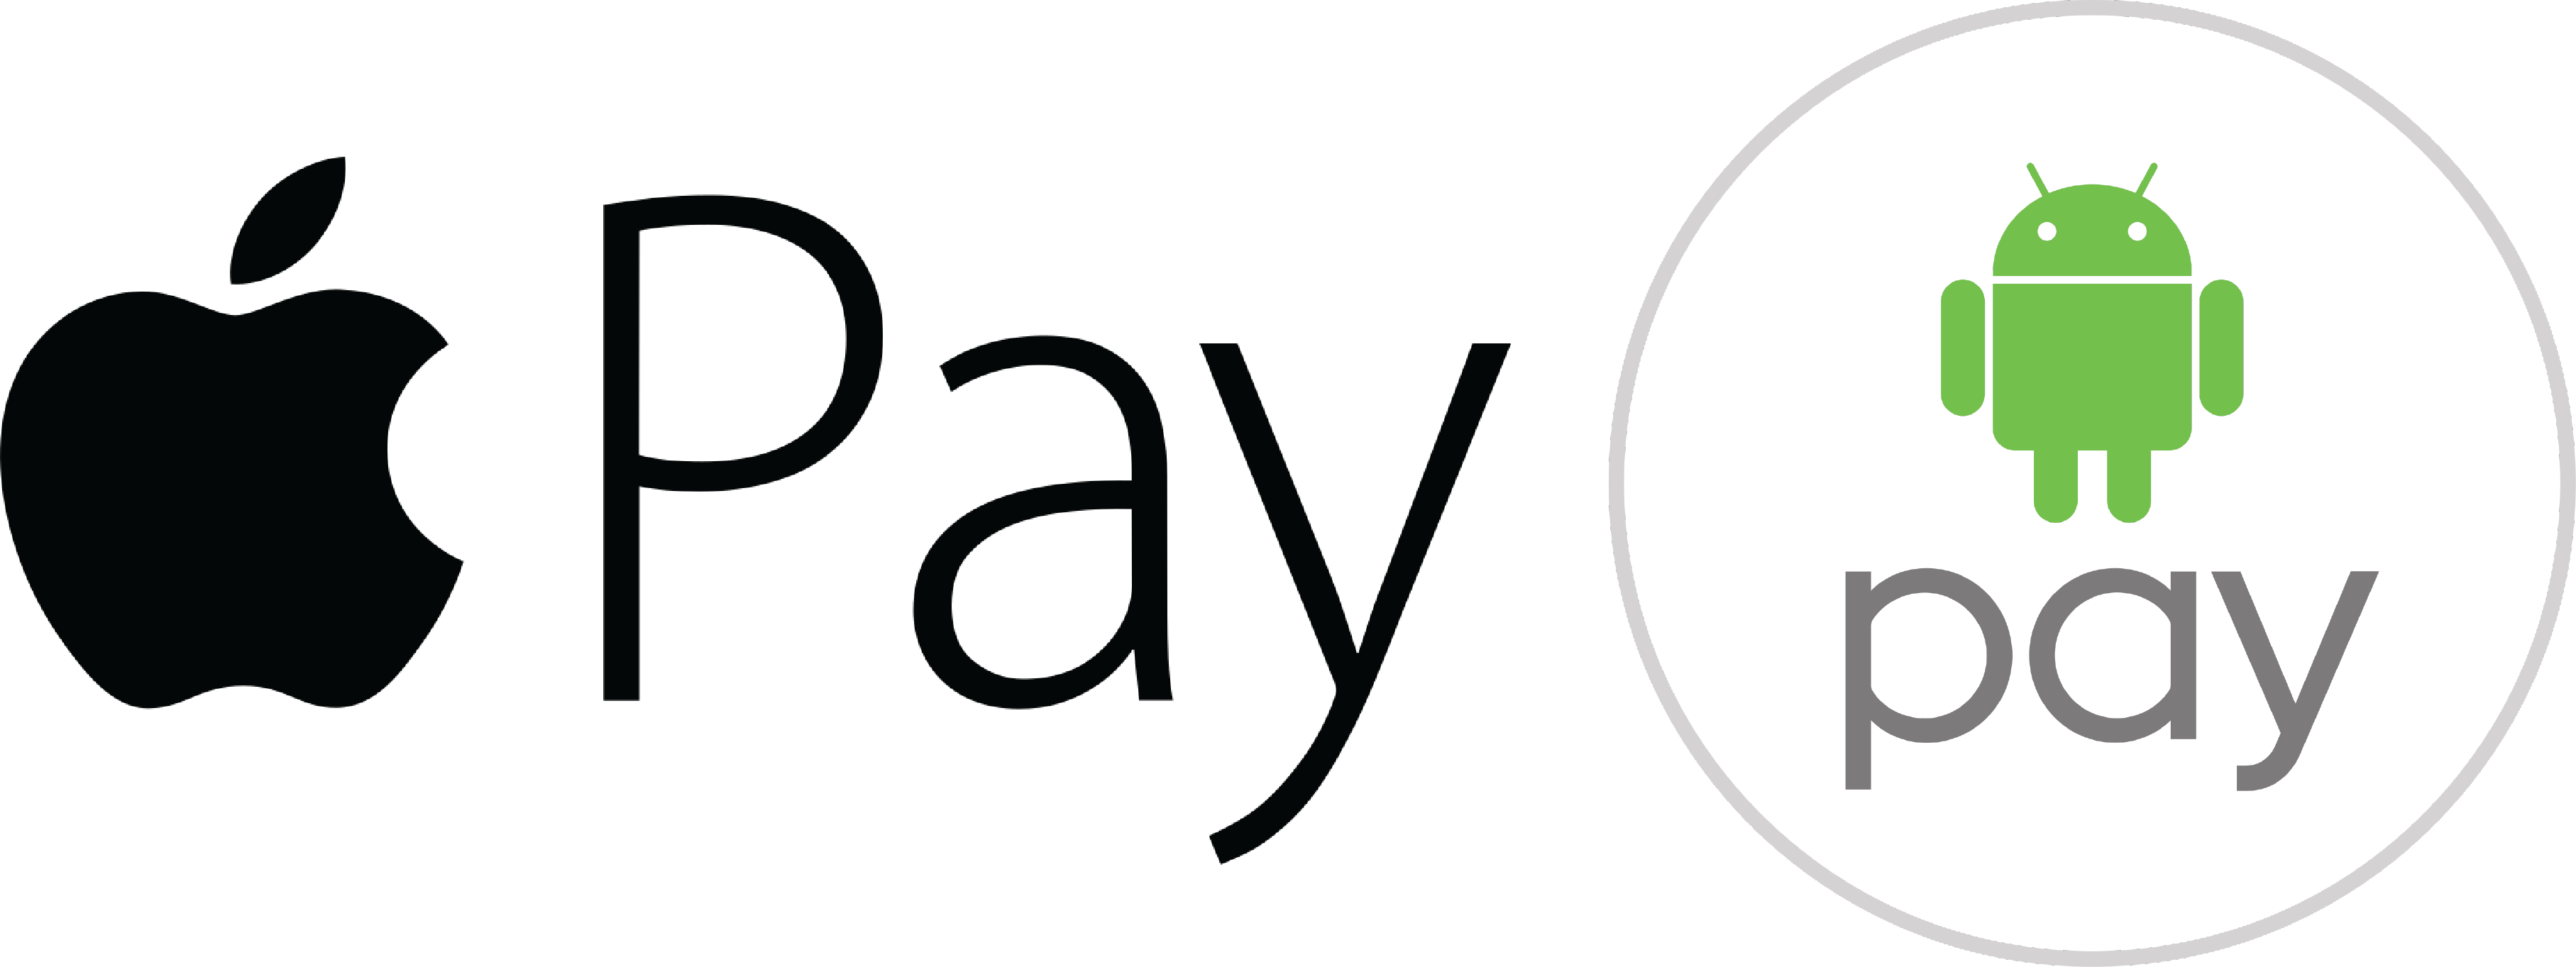 Pay. Логотип pay. Android pay логотип. Эпл Пэй лого. Значок Эппл Пай.